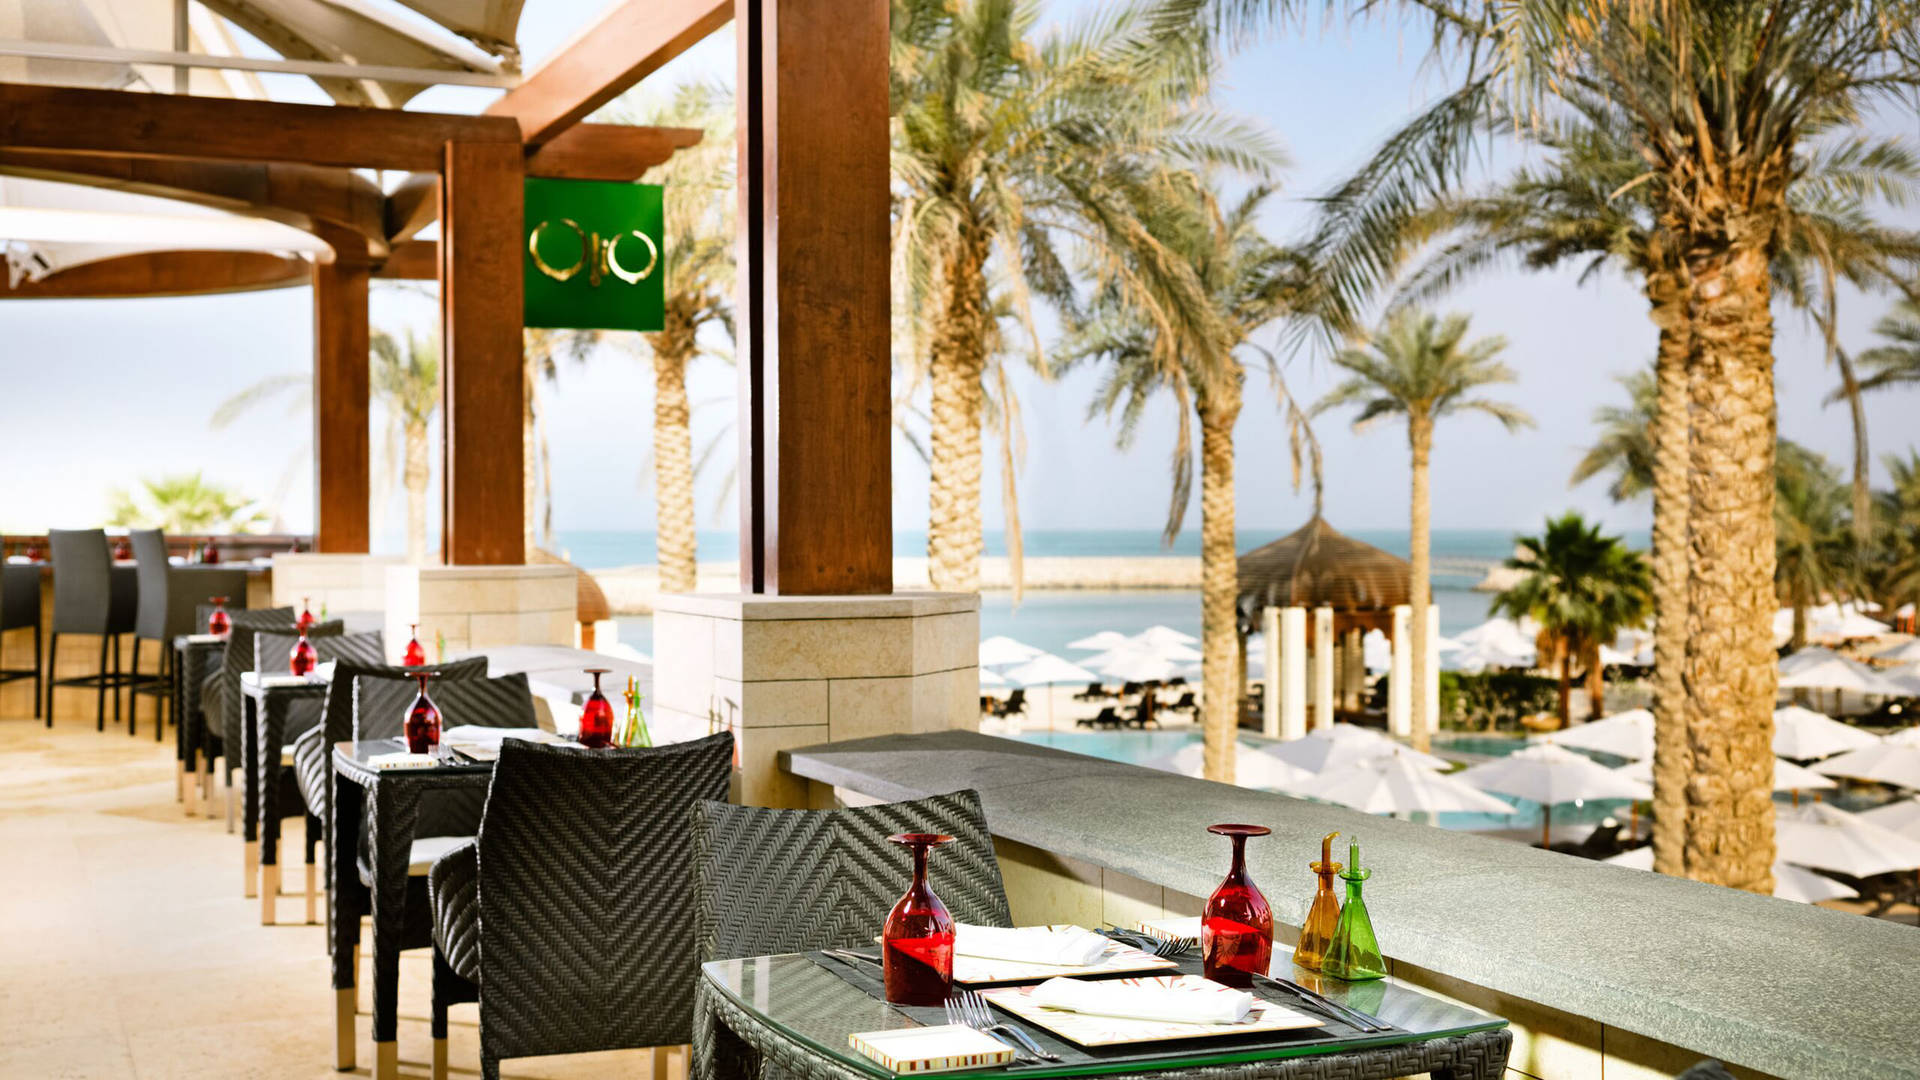 Dining outside at Jumeirah Messilah Beach Hotel 